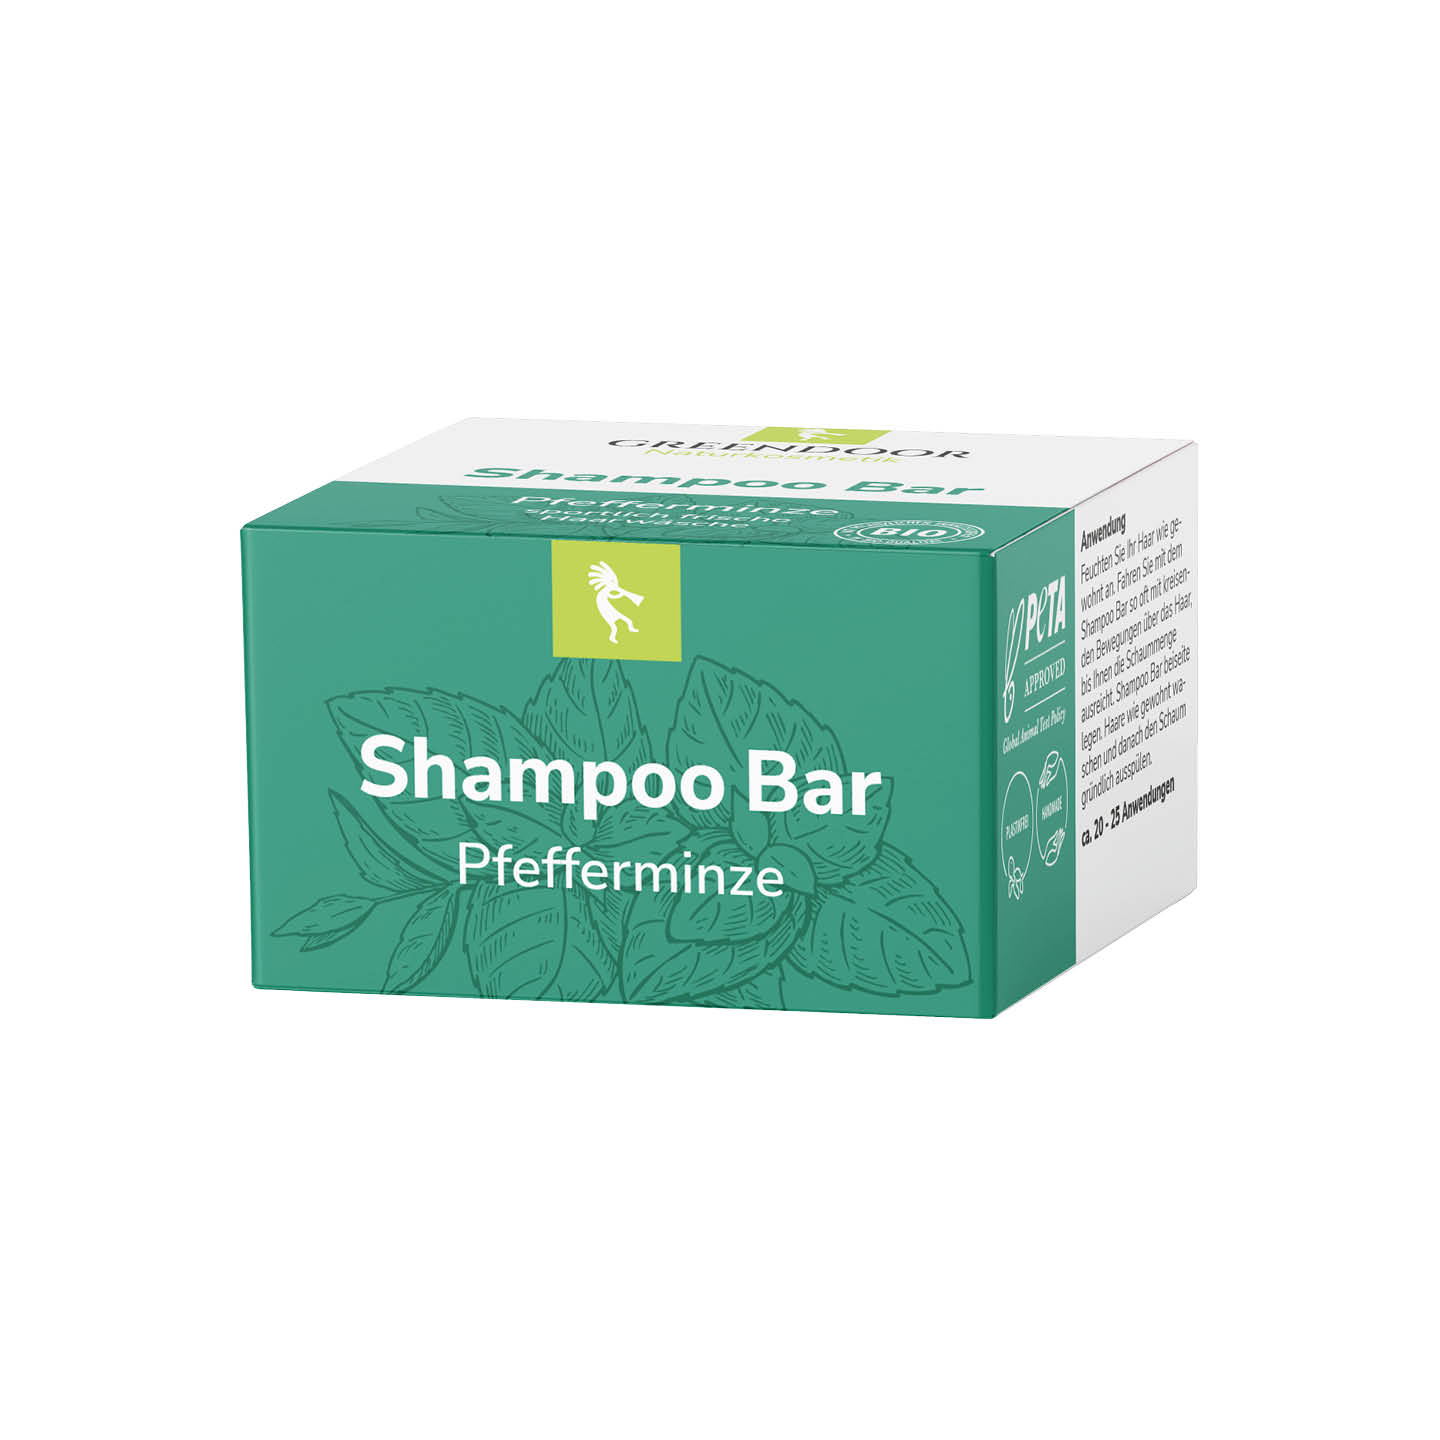 Shampoo Bar Pfefferminze